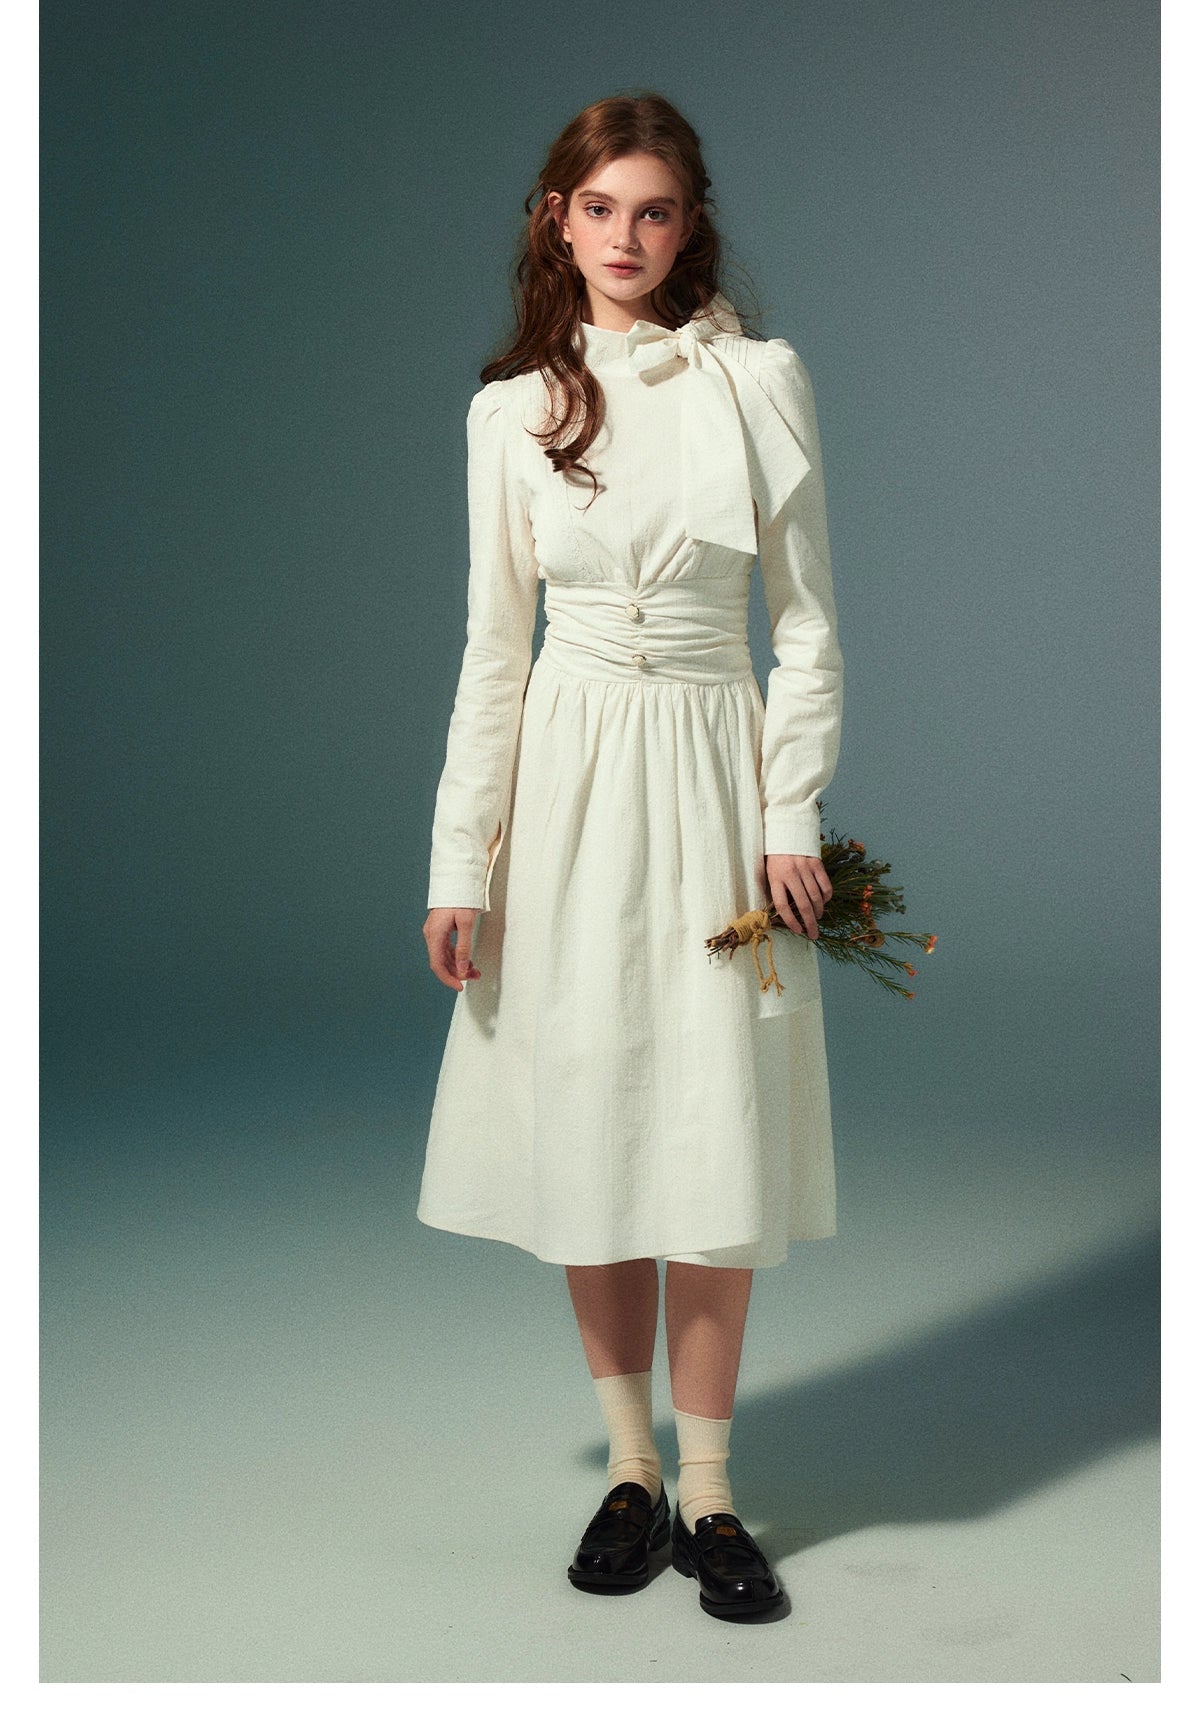 White Bow Striped Texture Dress - CHINASQUAD